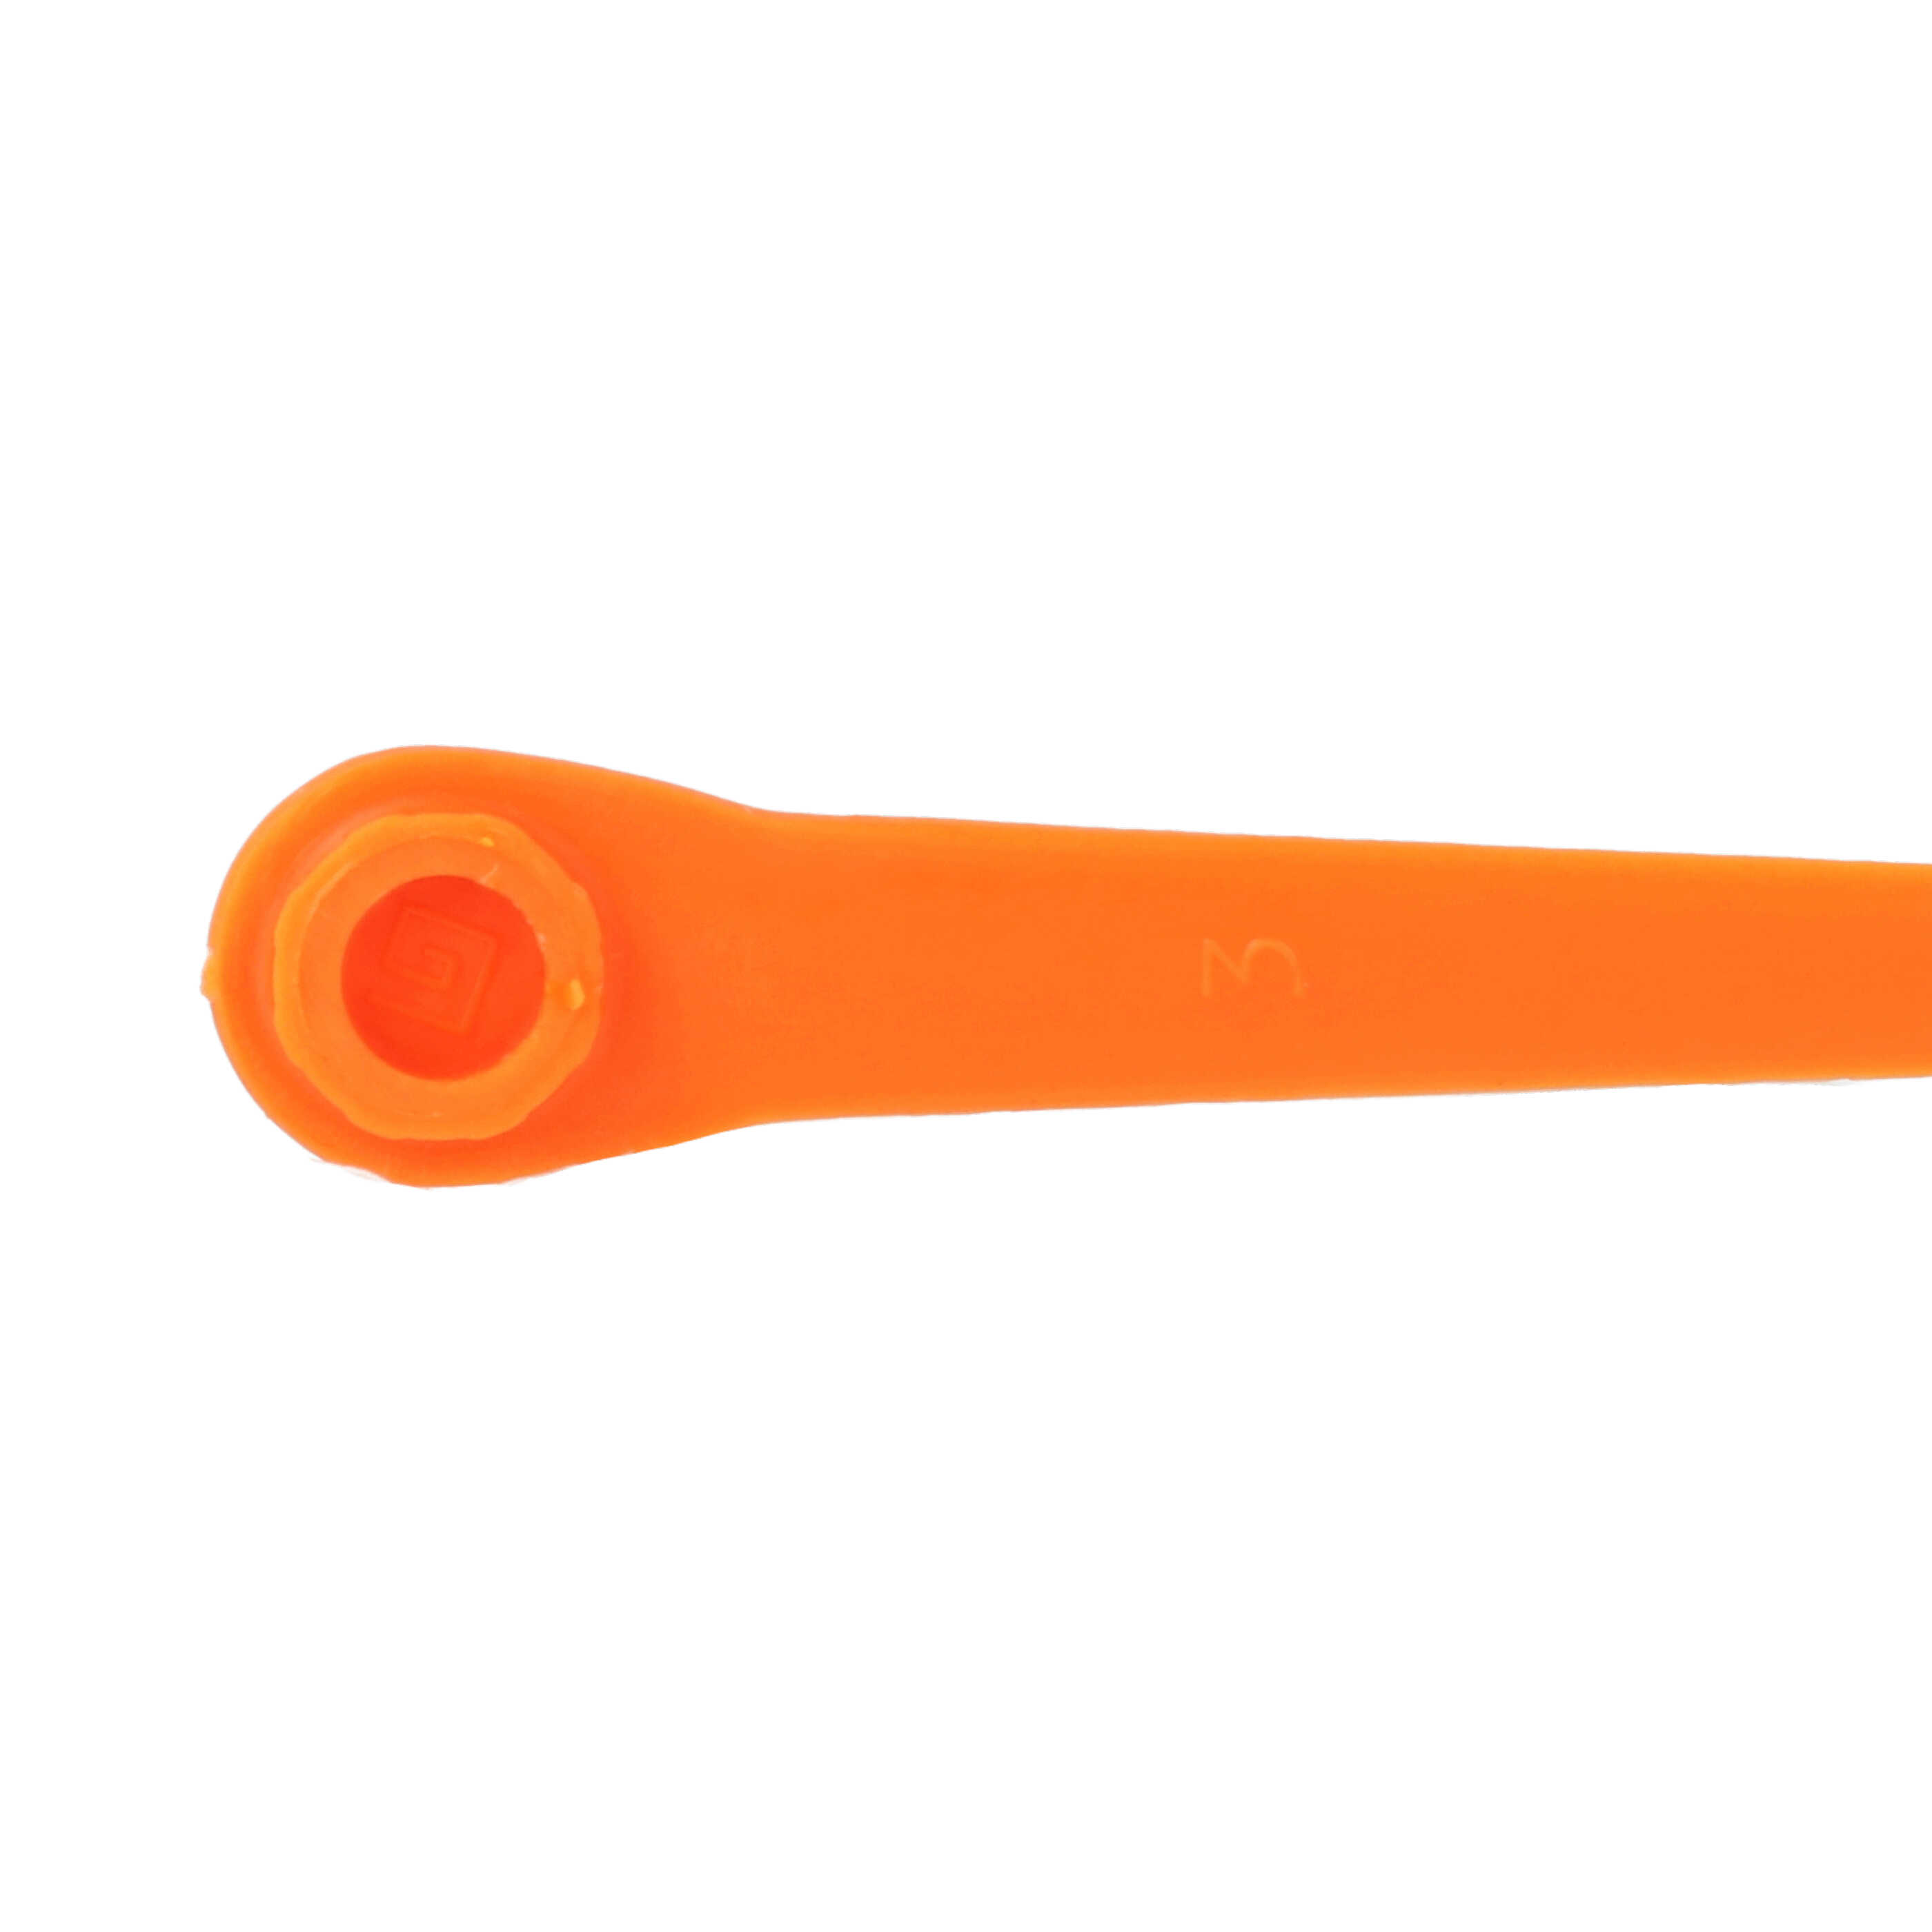 50x Lama sostituisce Gardena RotorCut 5368-20 per tagliaerba - arancione, plastica